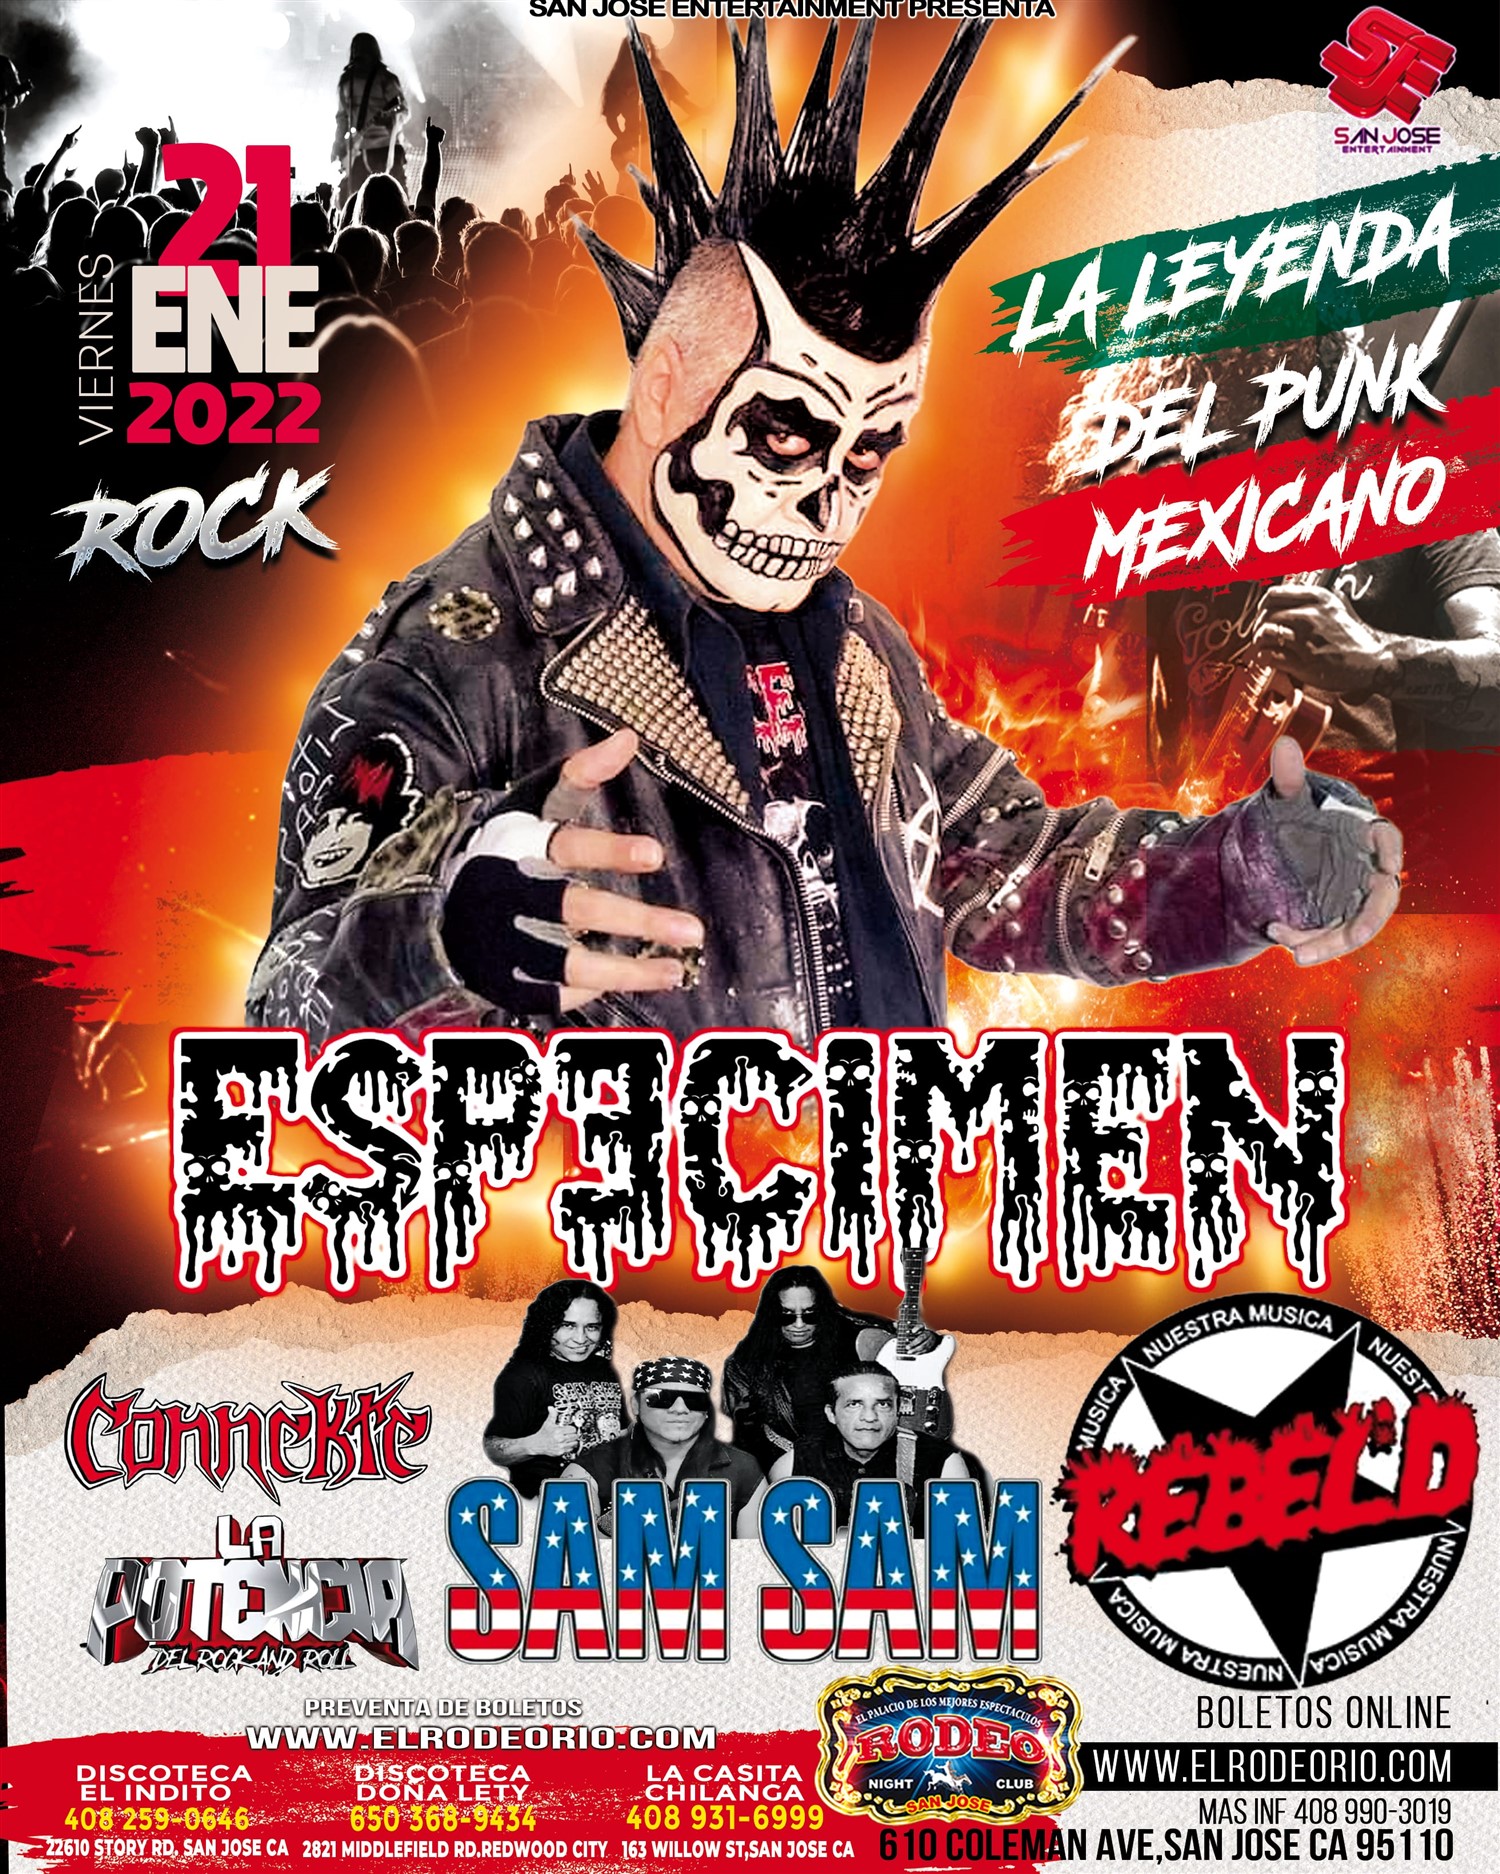 Especimen,Sam Sam,Rebel'D y Connekte  on Jan 21, 21:00@Club Rodeo - Buy tickets and Get information on elrodeorio.com sanjoseentertainment